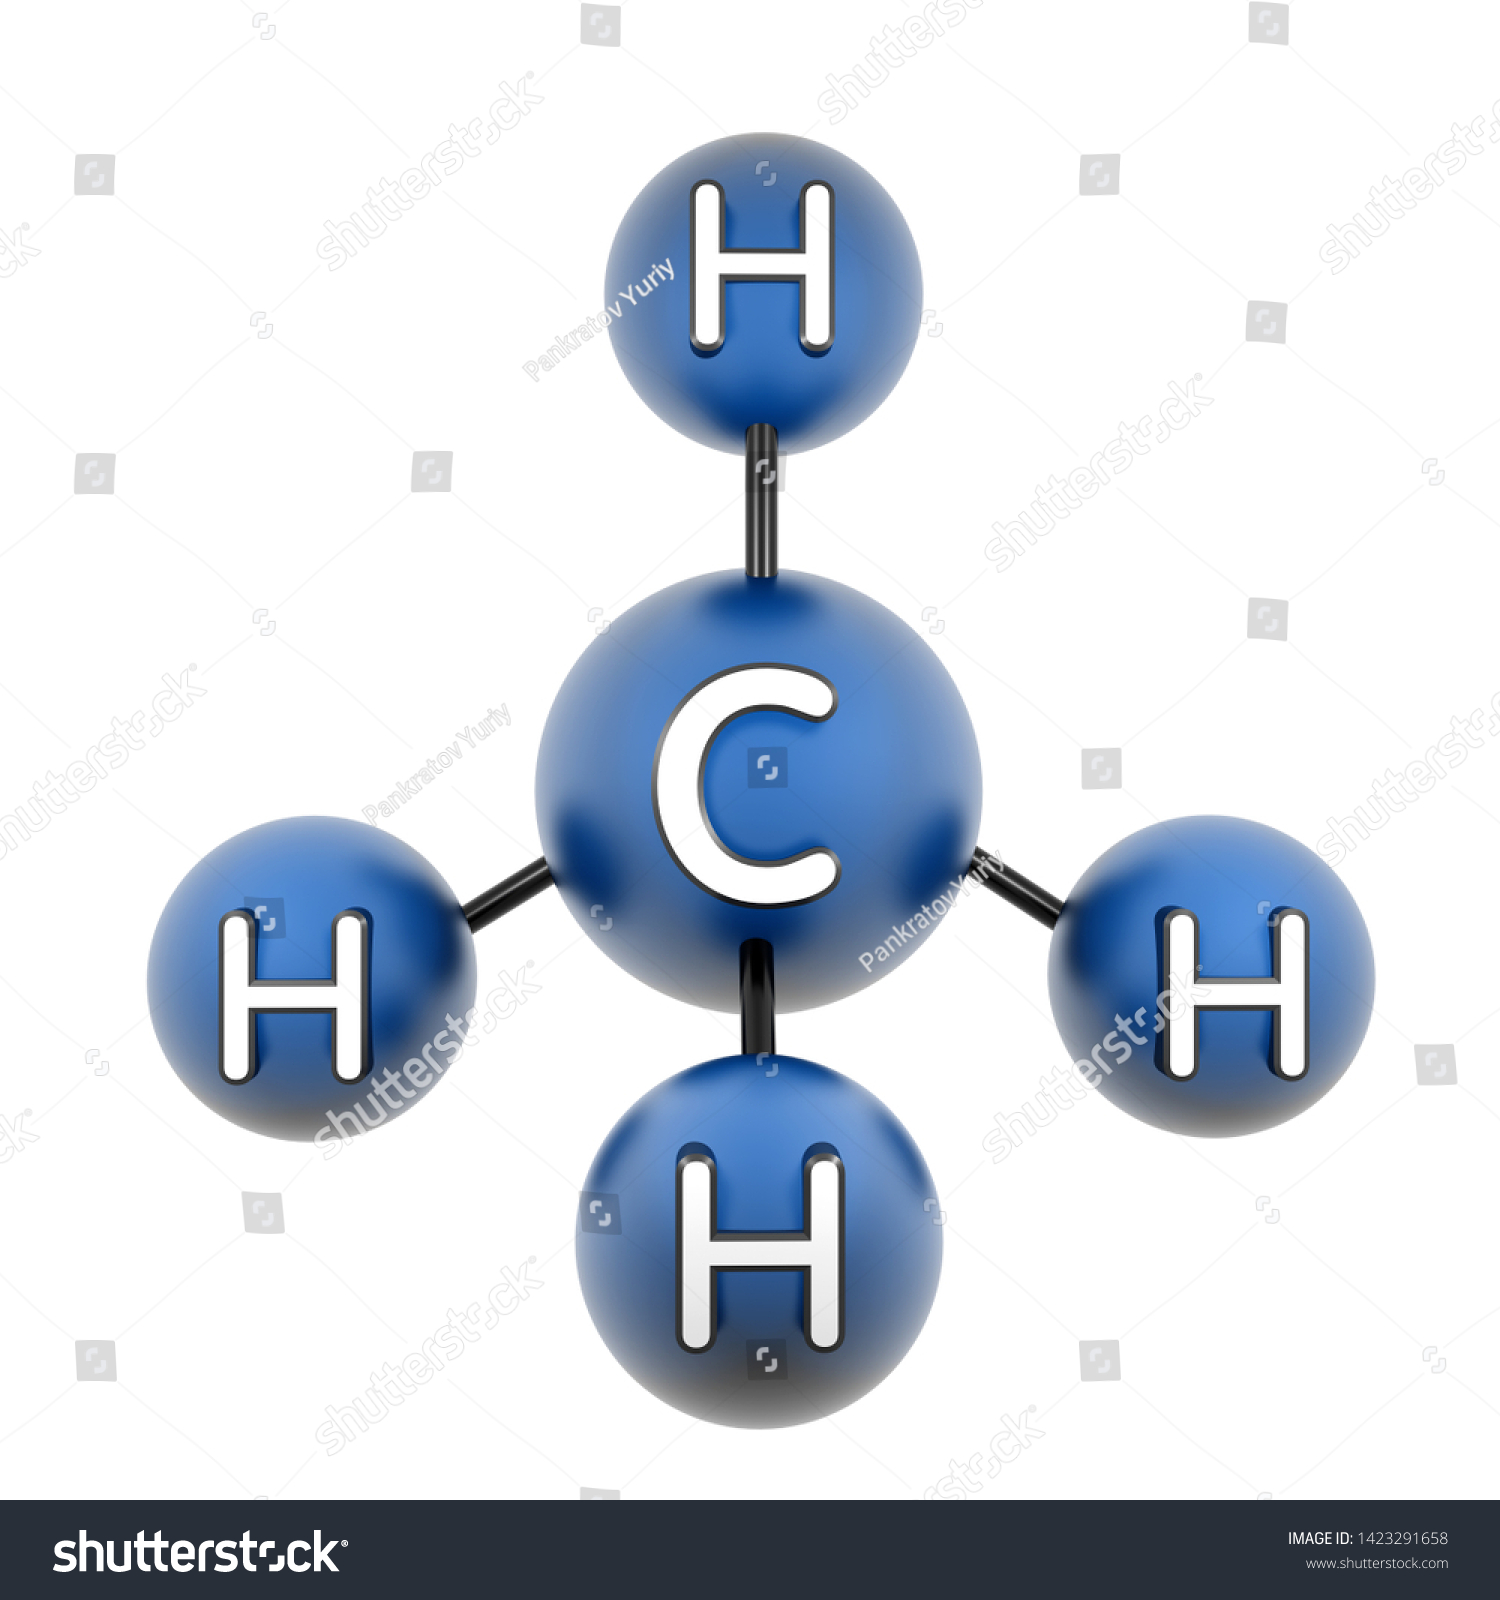 Ch4 Molecule Methane Render 3d Model Stockillustration 1423291658